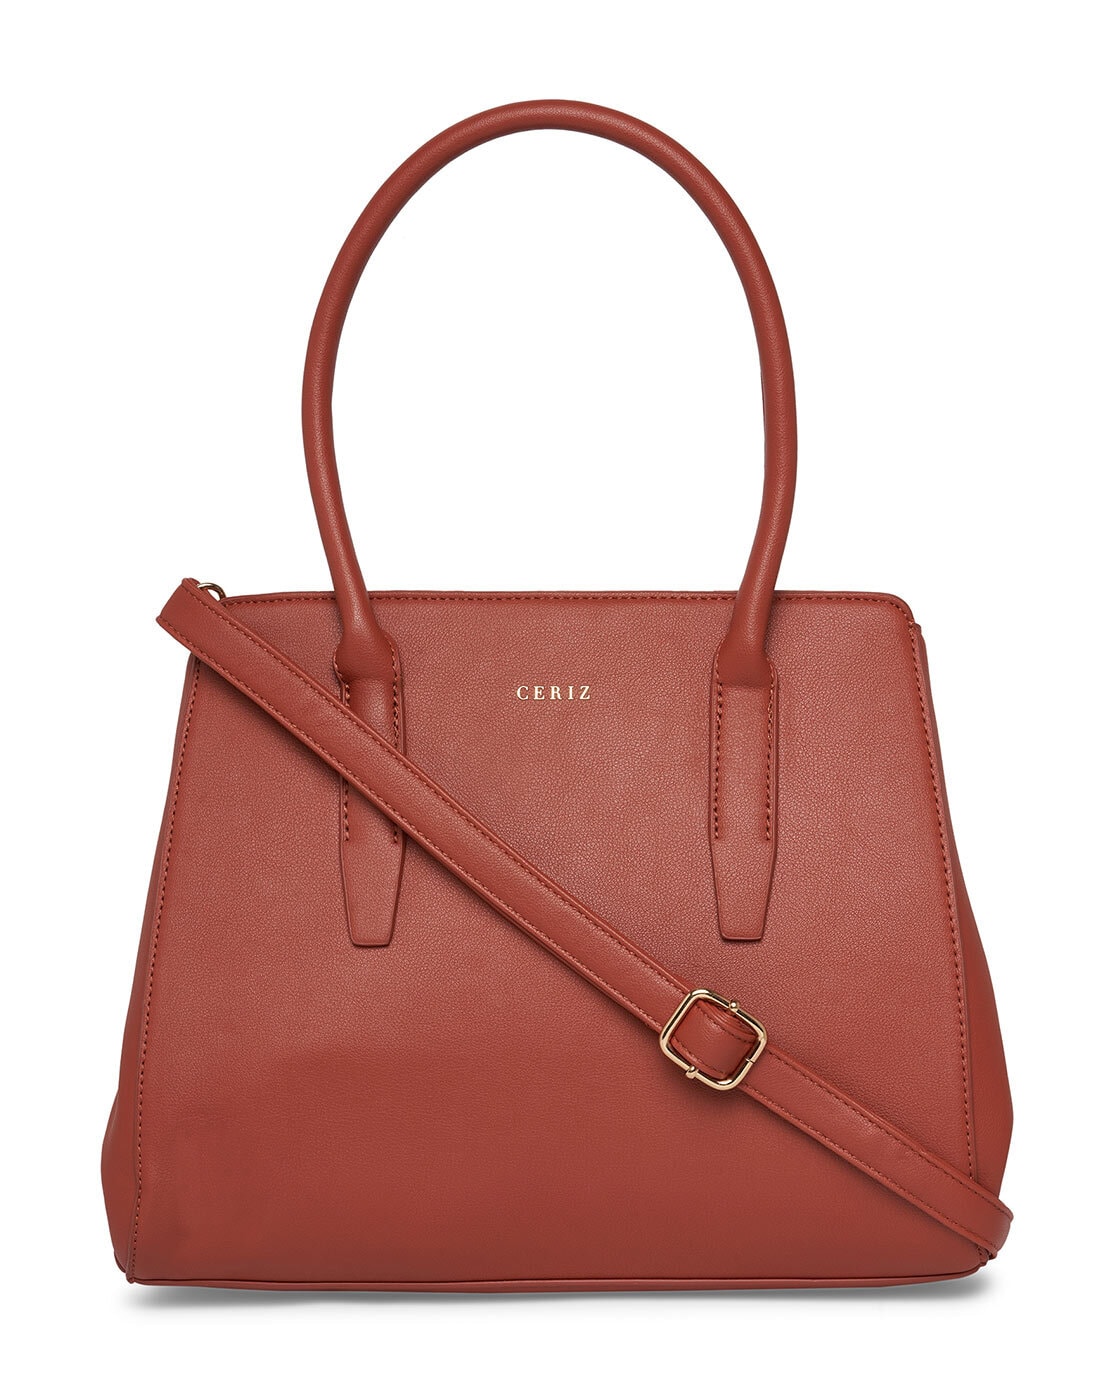 Check Out Ceriz For Cute Handbags & Fancy Shoes | LBB